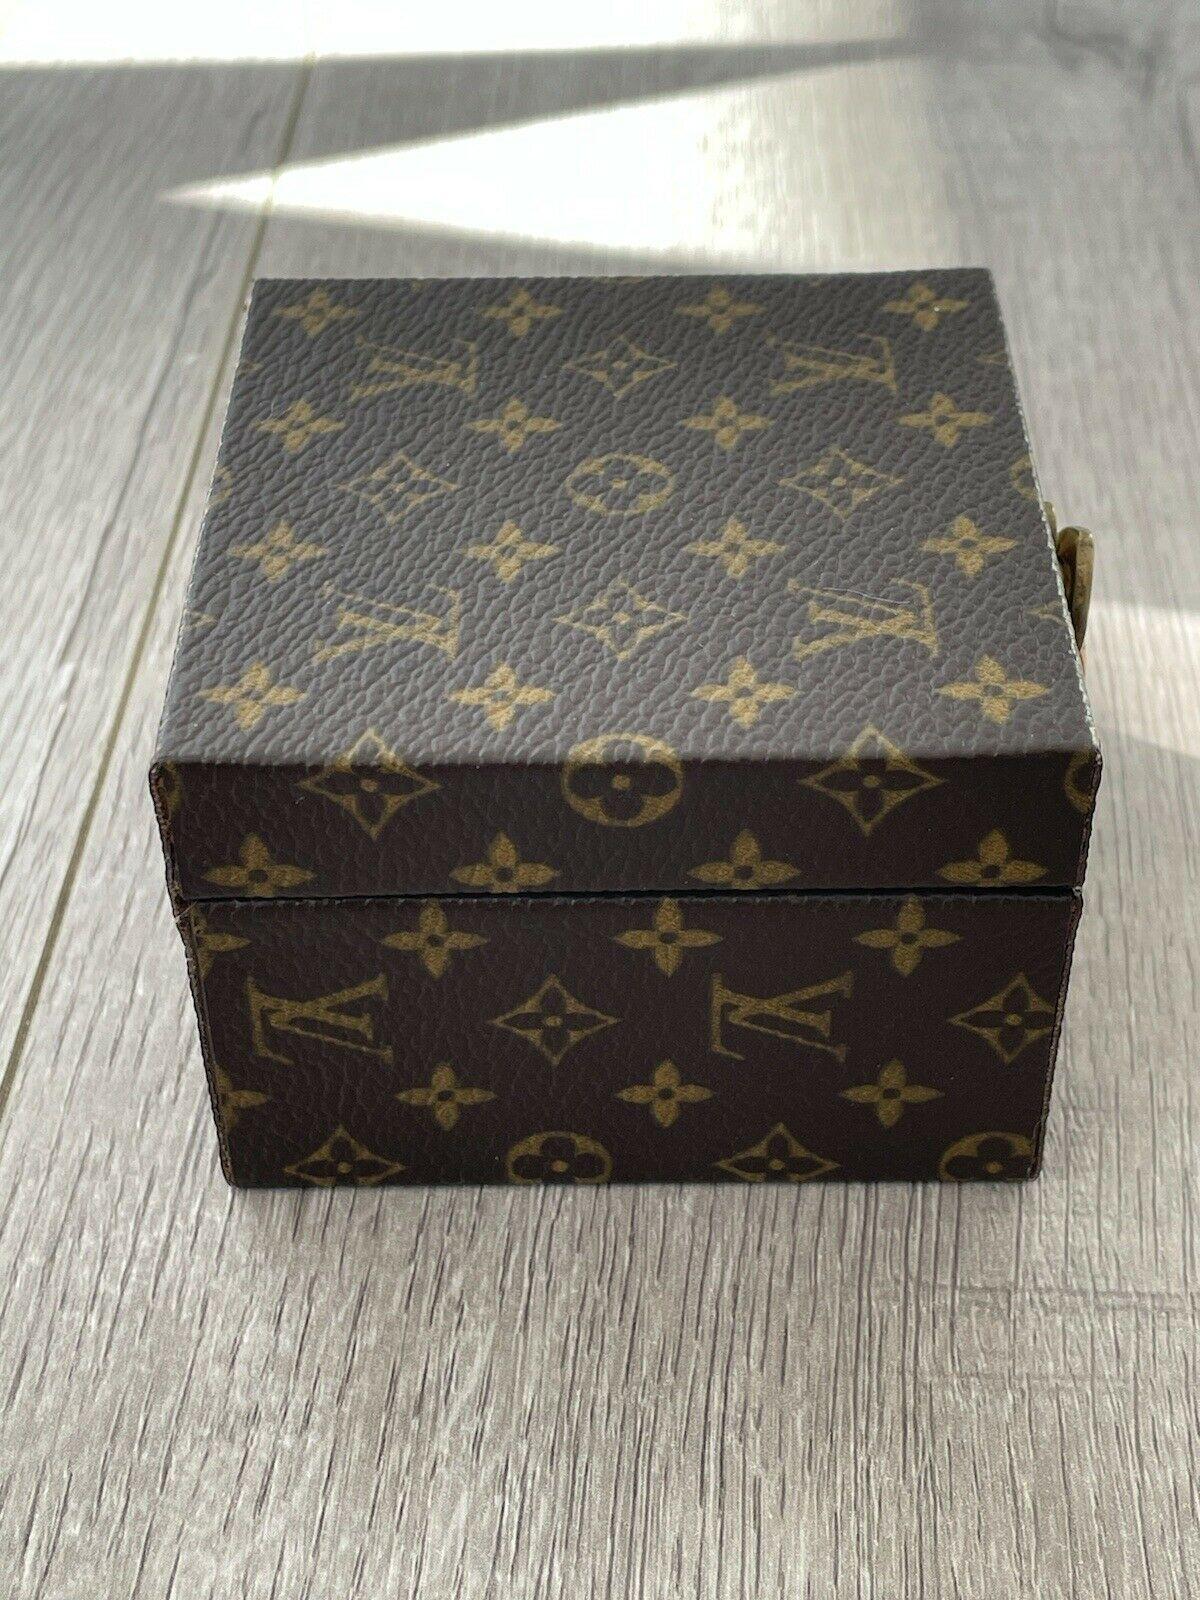 Authentic Louis Vuitton LV Logo Monogram Jewelry Hard Case Necklace Pendant Box 2